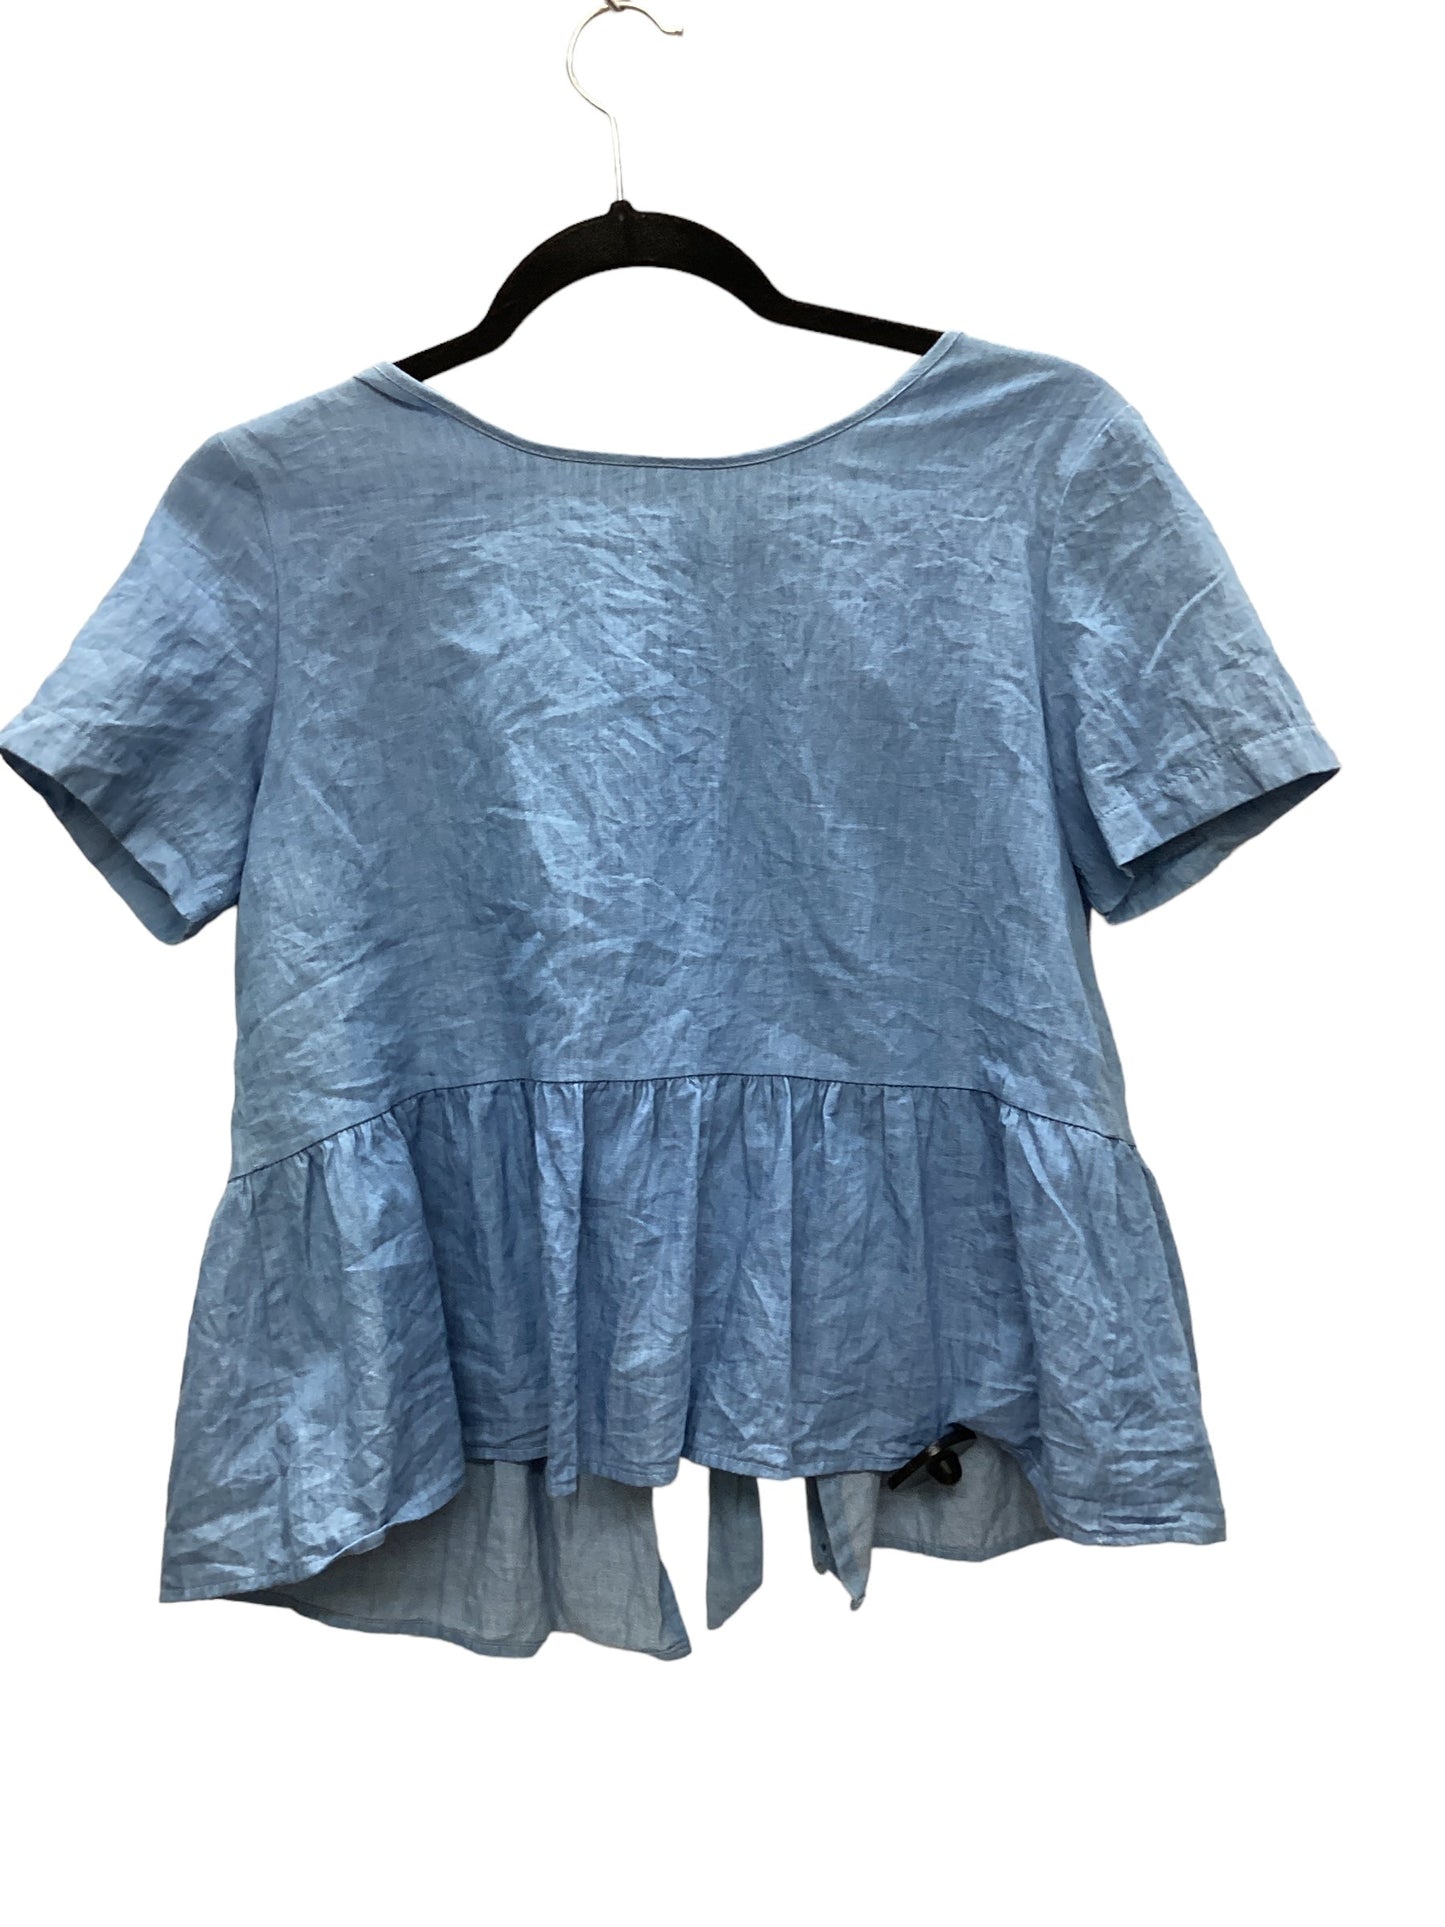 Blue Denim Top Short Sleeve Clothes Mentor, Size S